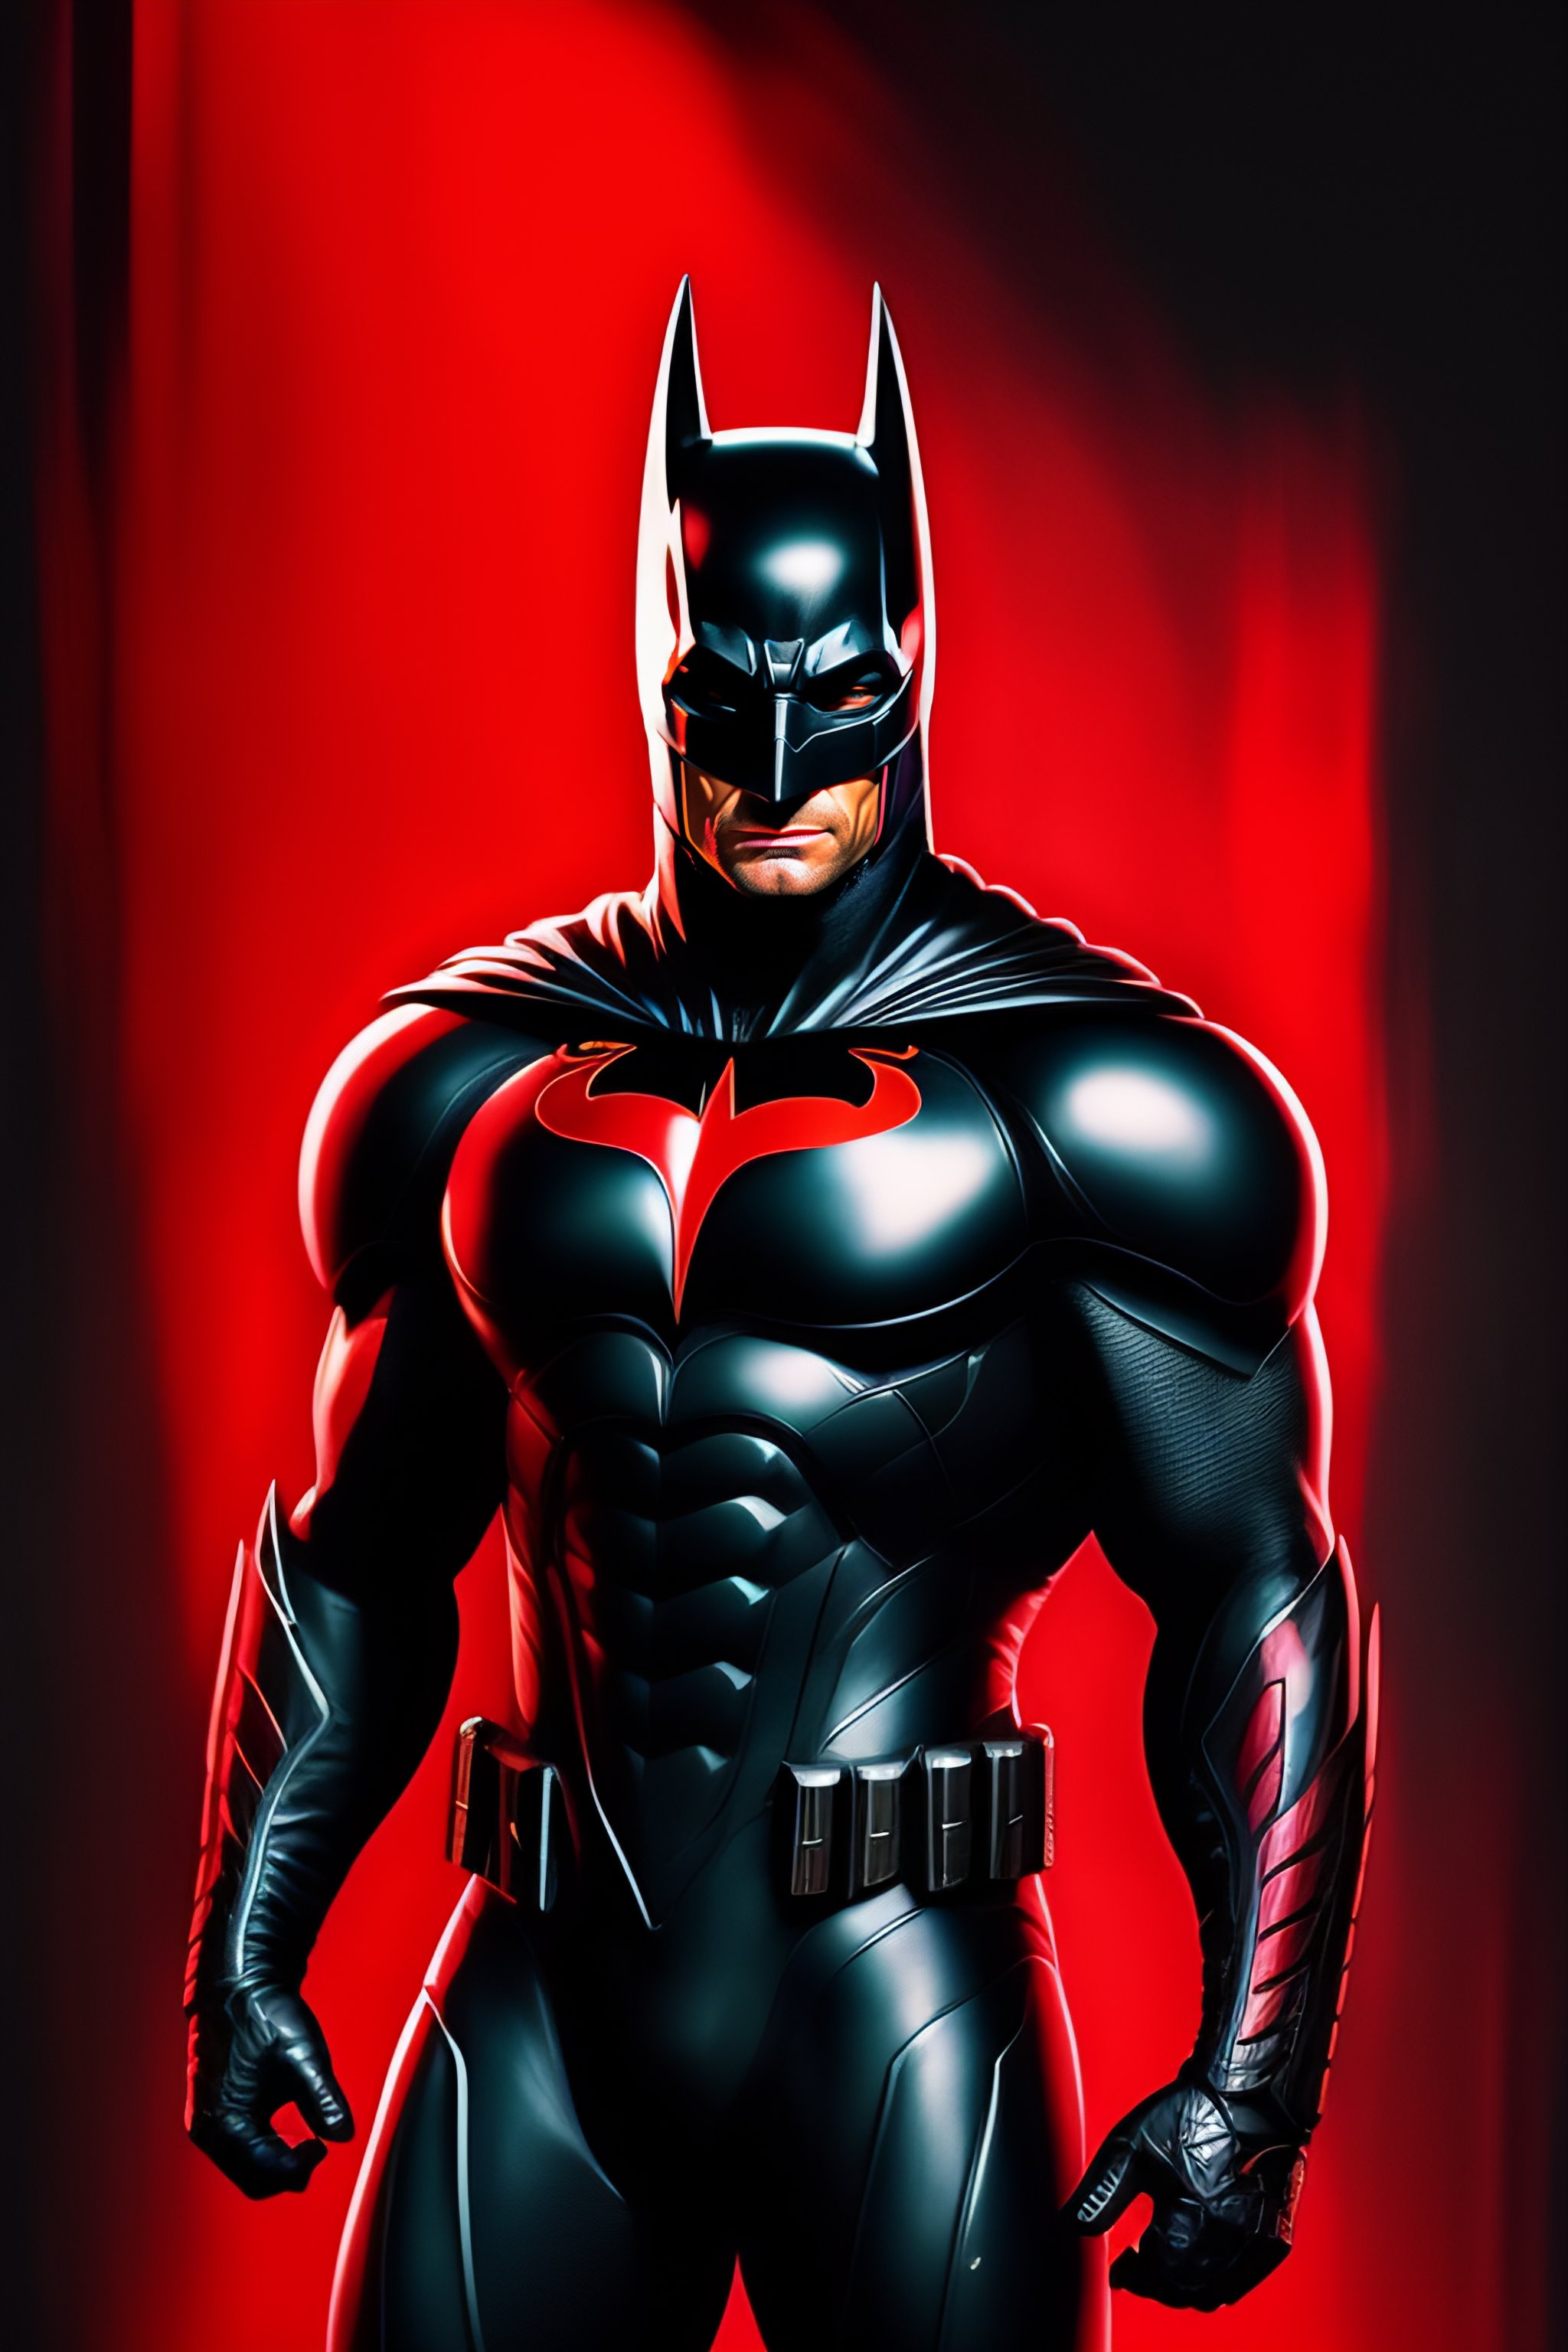 Lexica - Hugh jackman as bruce wayne with batsuit in batman movie, full ...